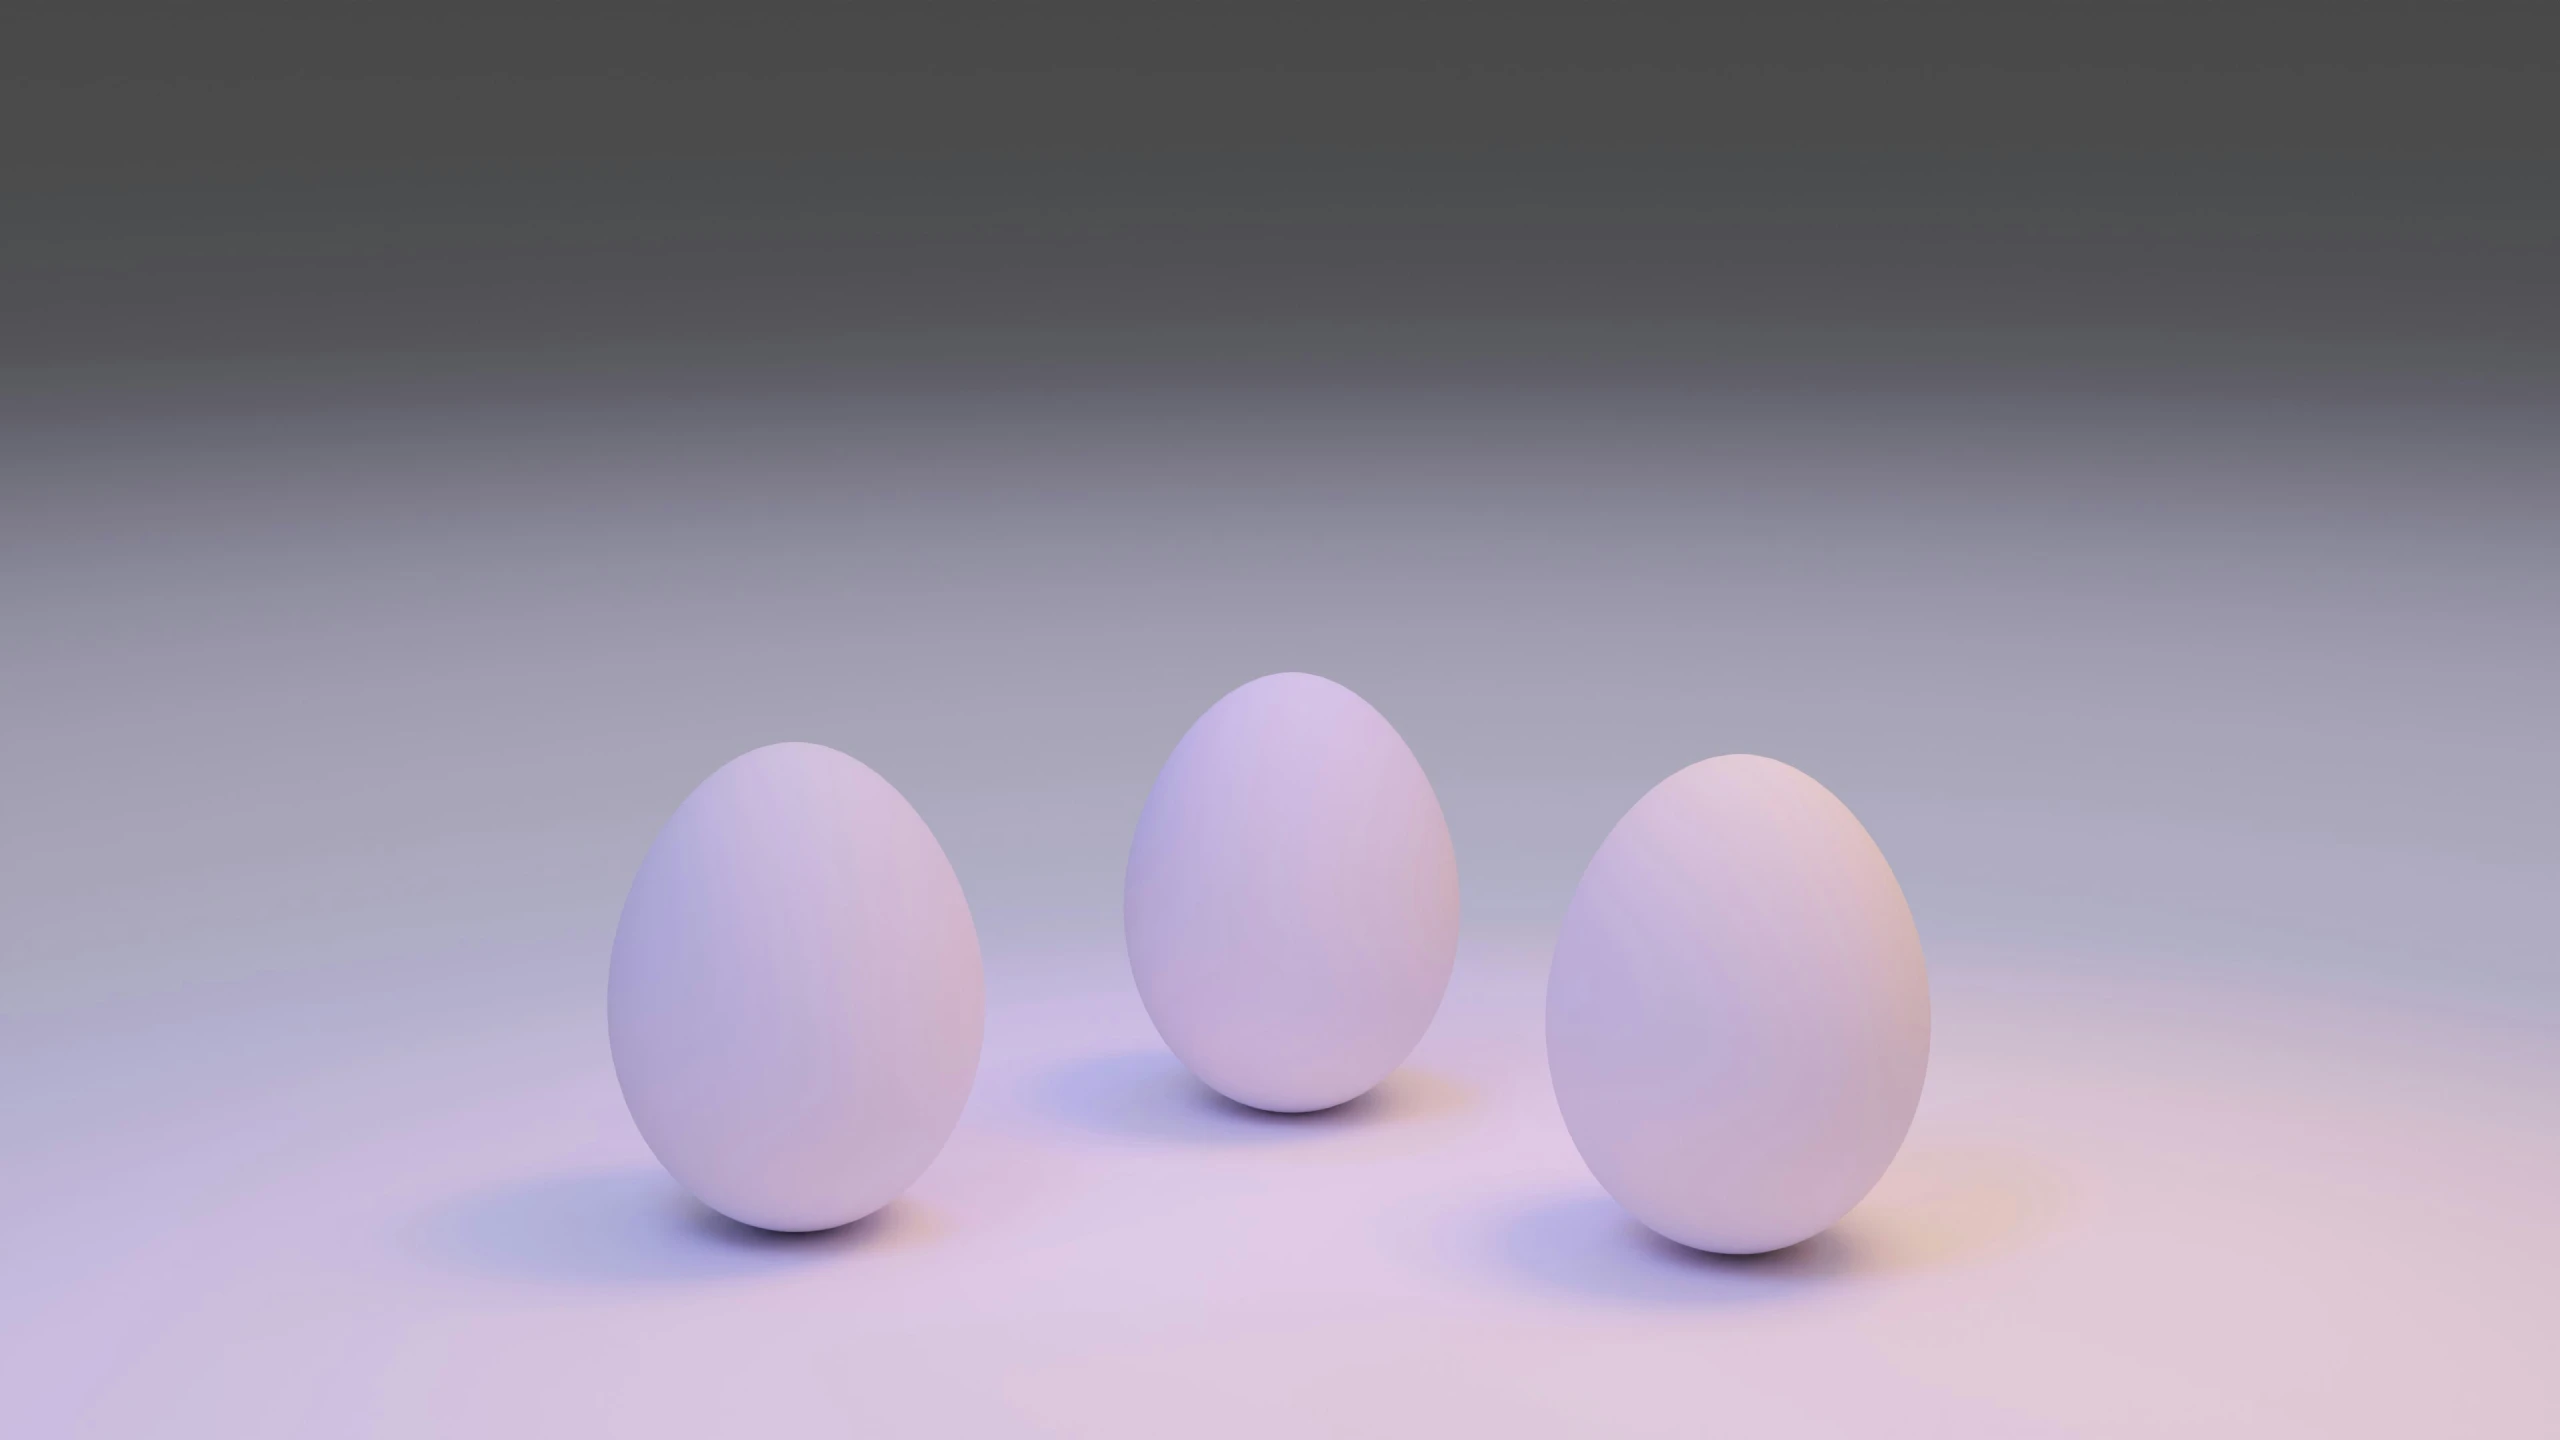 three white eggs sitting next to each other